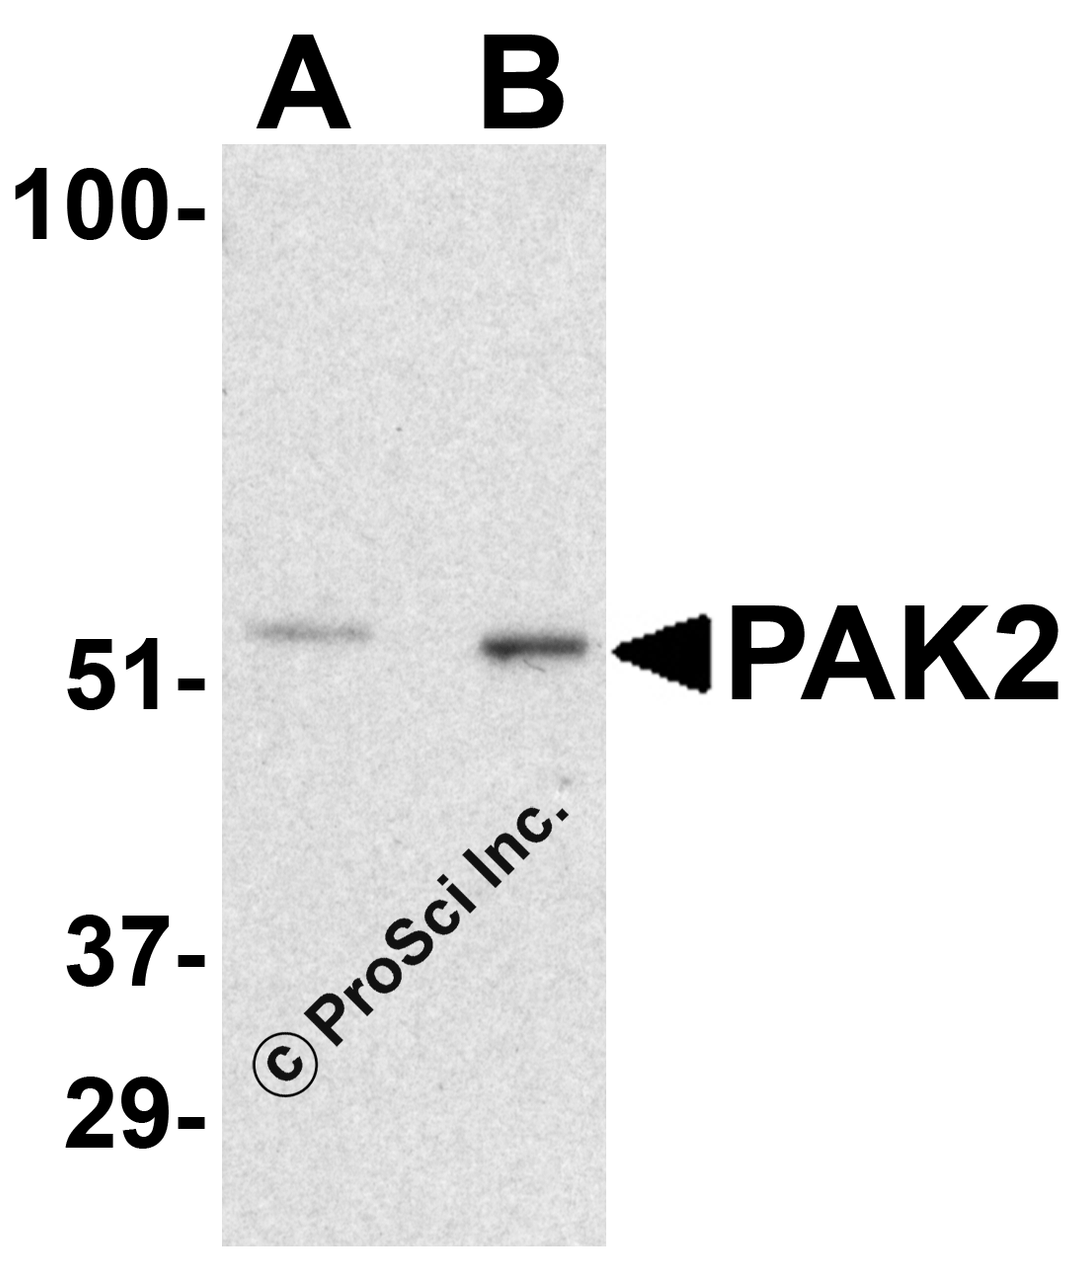 Figure 1 Western Blot Validation in Rat Bladder Tissue Lysate
Loading: 15 &#956;g of lysates per lane.
Antibodies: PAK2 3885 (A: 0.5 &#956;g/mL, B: 1 &#956;g/mL) , 1h incubation at RT in 5% NFDM/TBST.
Secondary: Goat anti-rabbit IgG HRP conjugate at 1:10000 dilution.